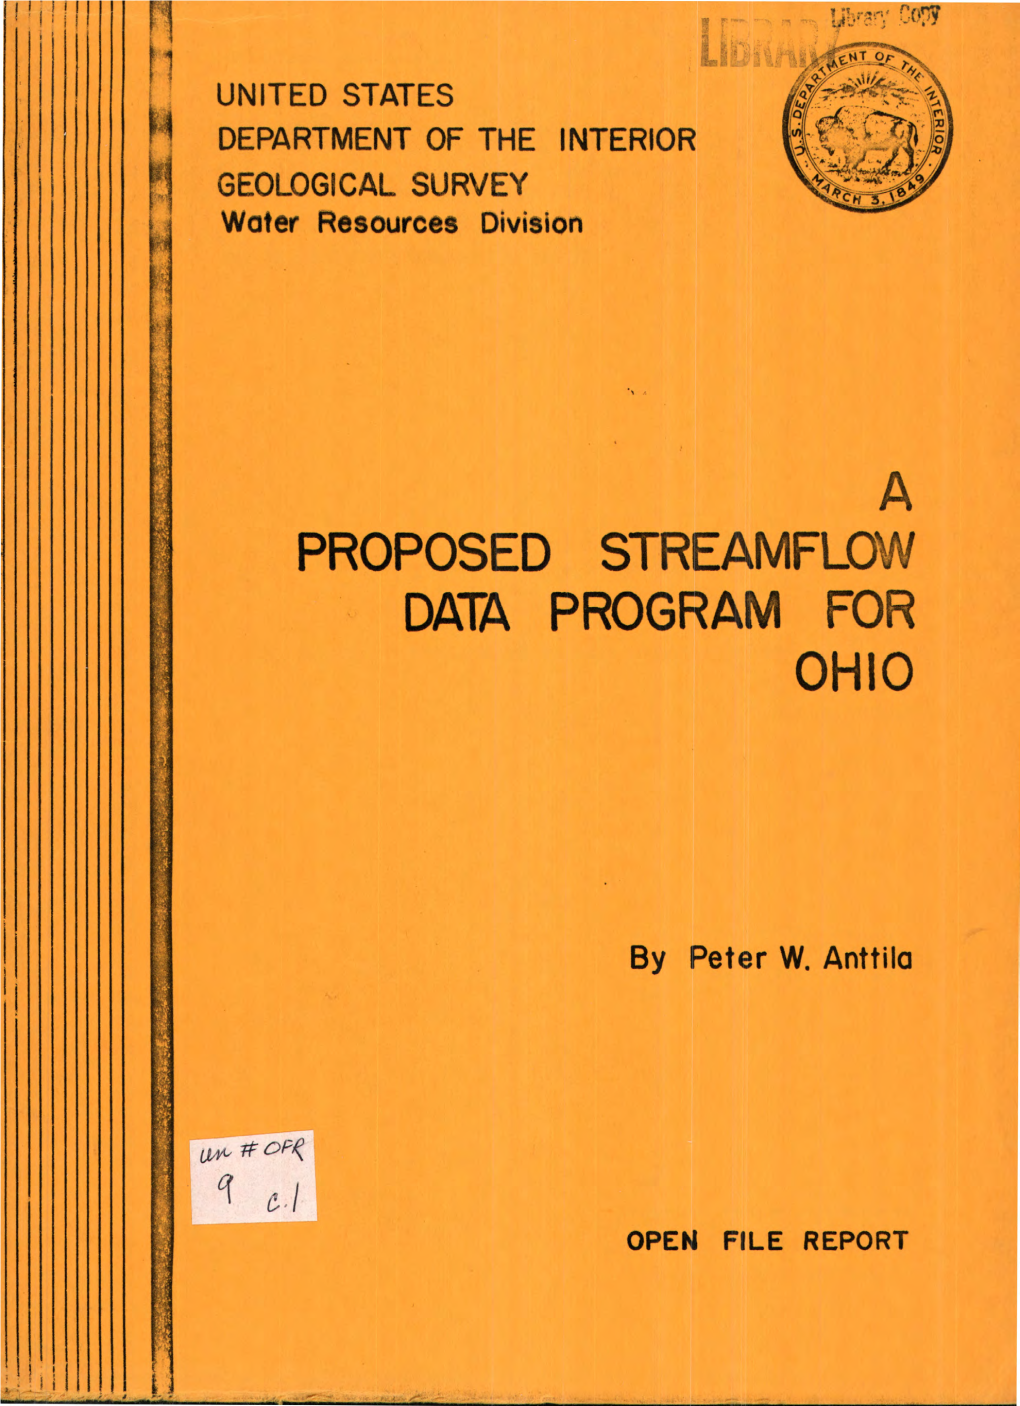 Proposed Streamflow Data Program for Ohio